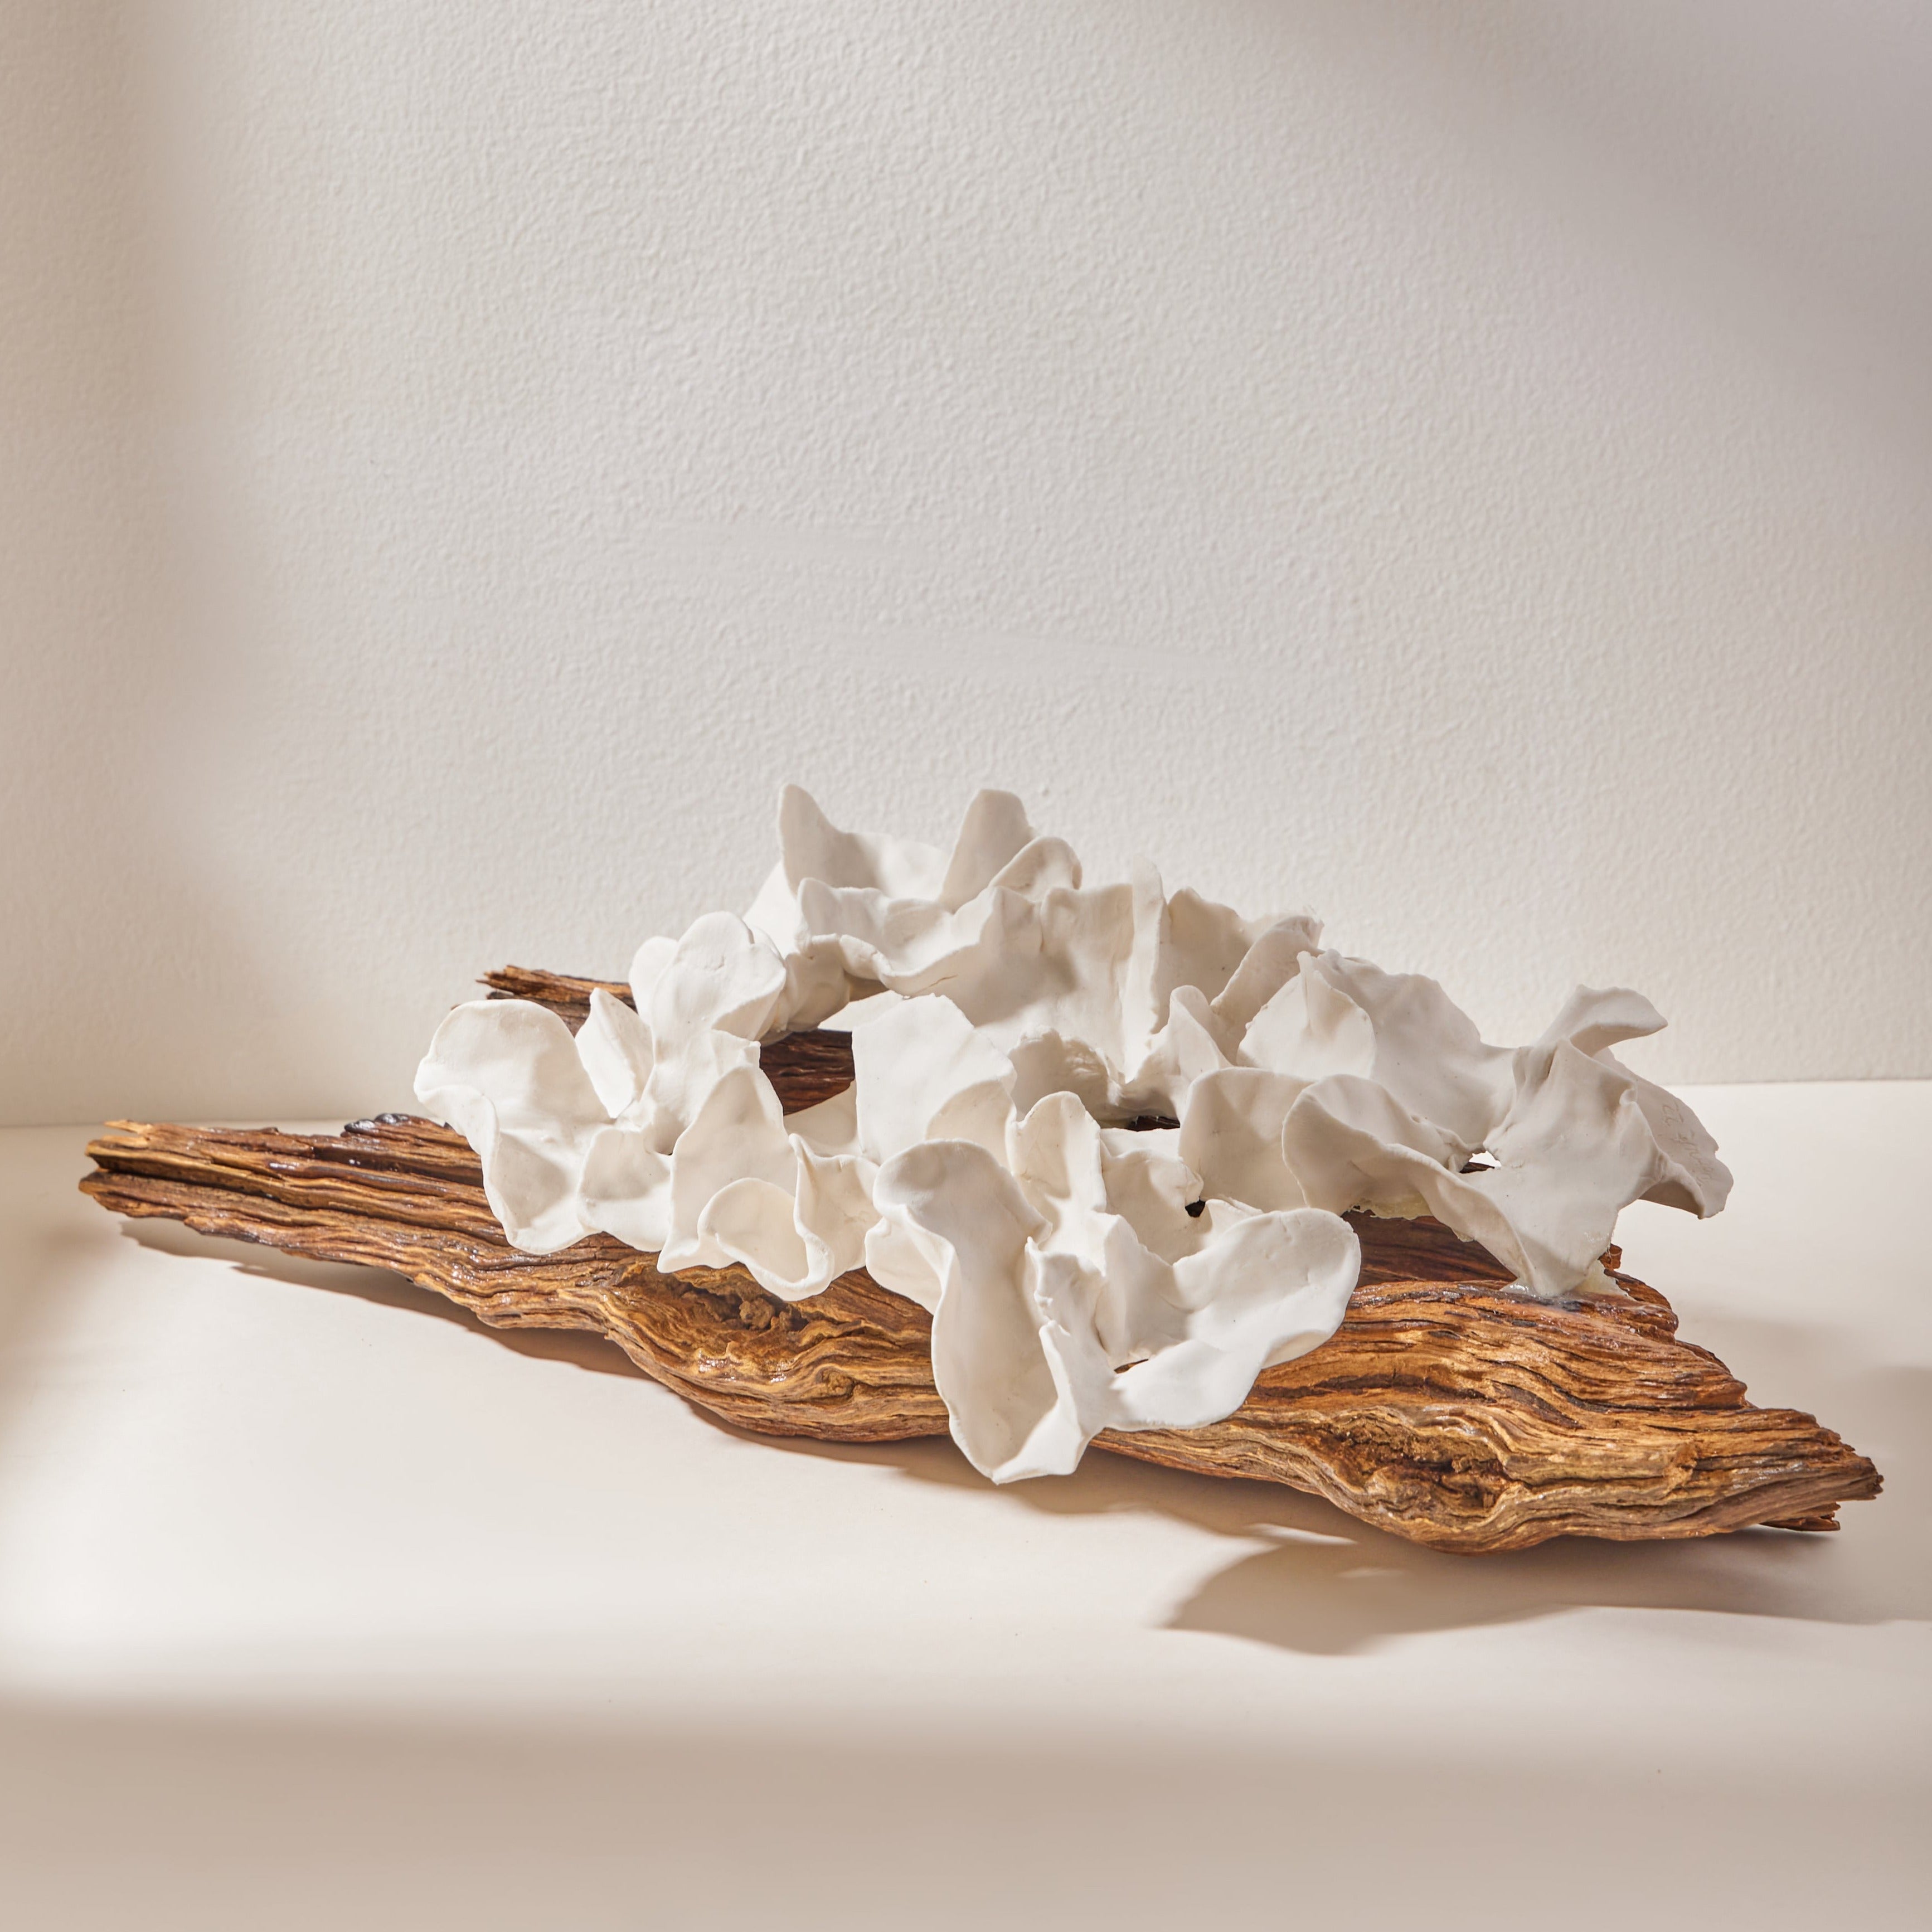 FLORA Ceramic and Driftwood Artwork